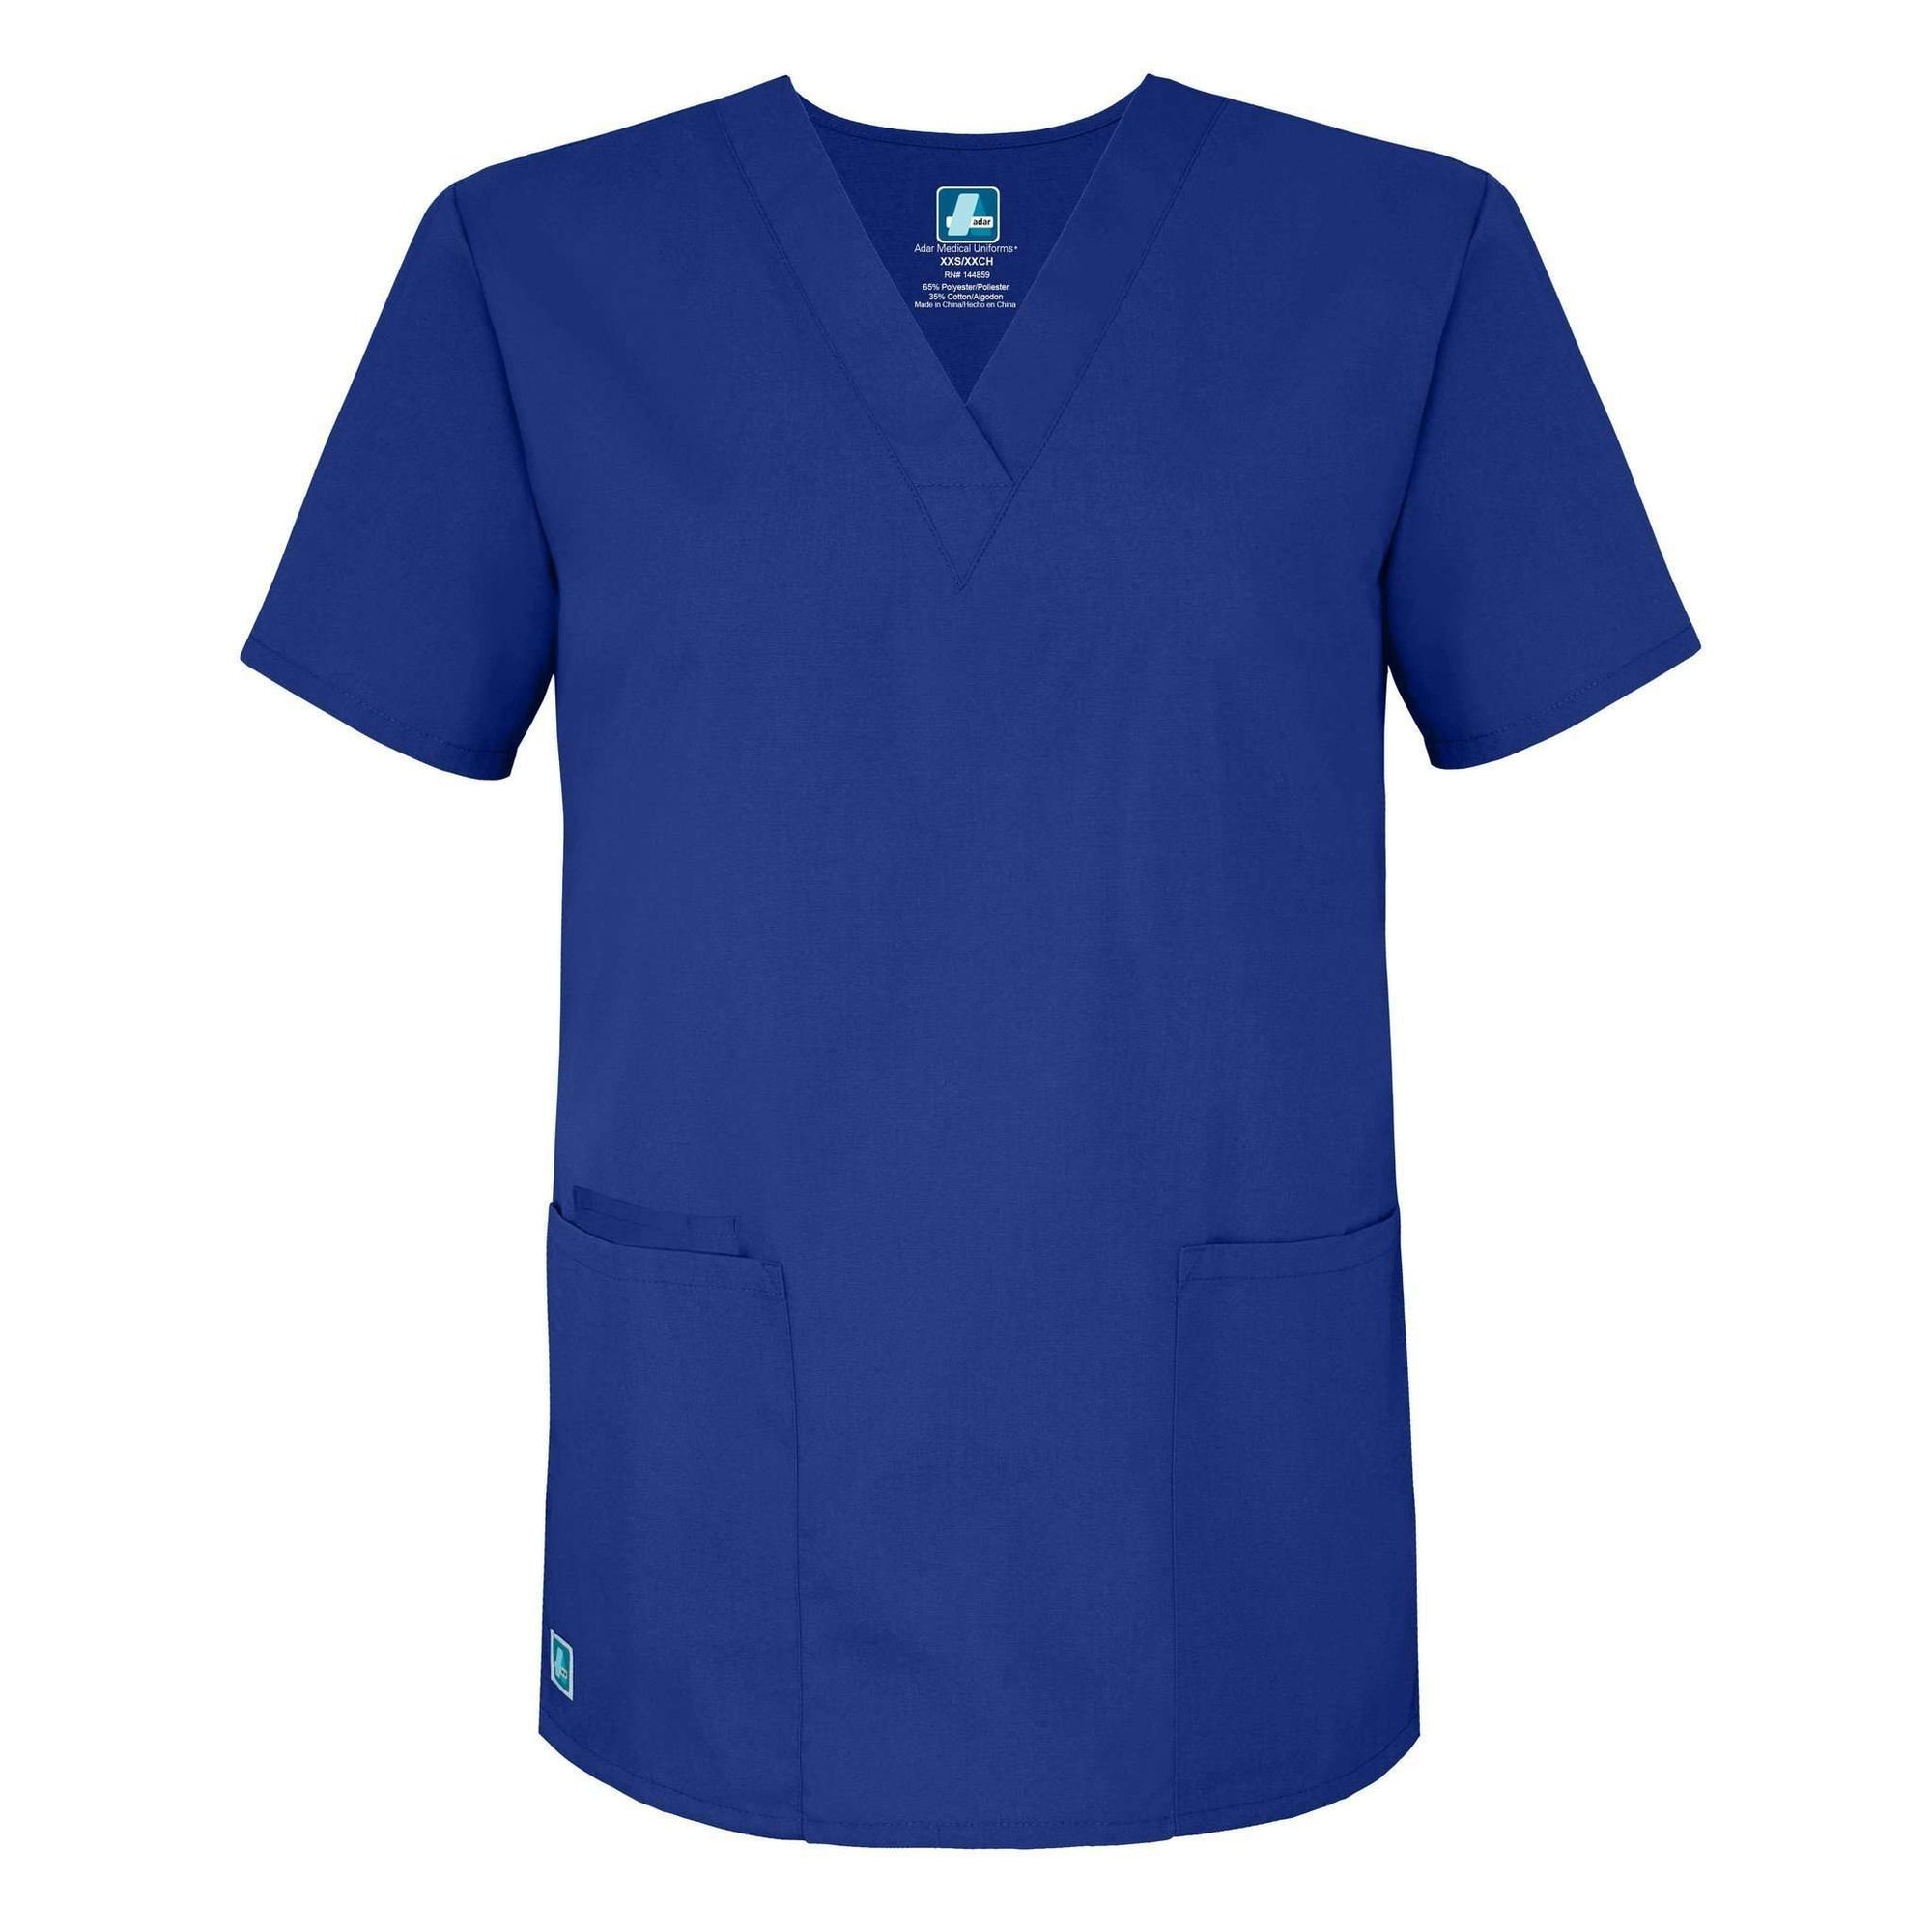  Adar - uniforms Medical Uniform Tops uniforms online Adar Universal Unisex V-Neck 2 Pocket Scrub Top Royal Blue - SchoolUniforms.com